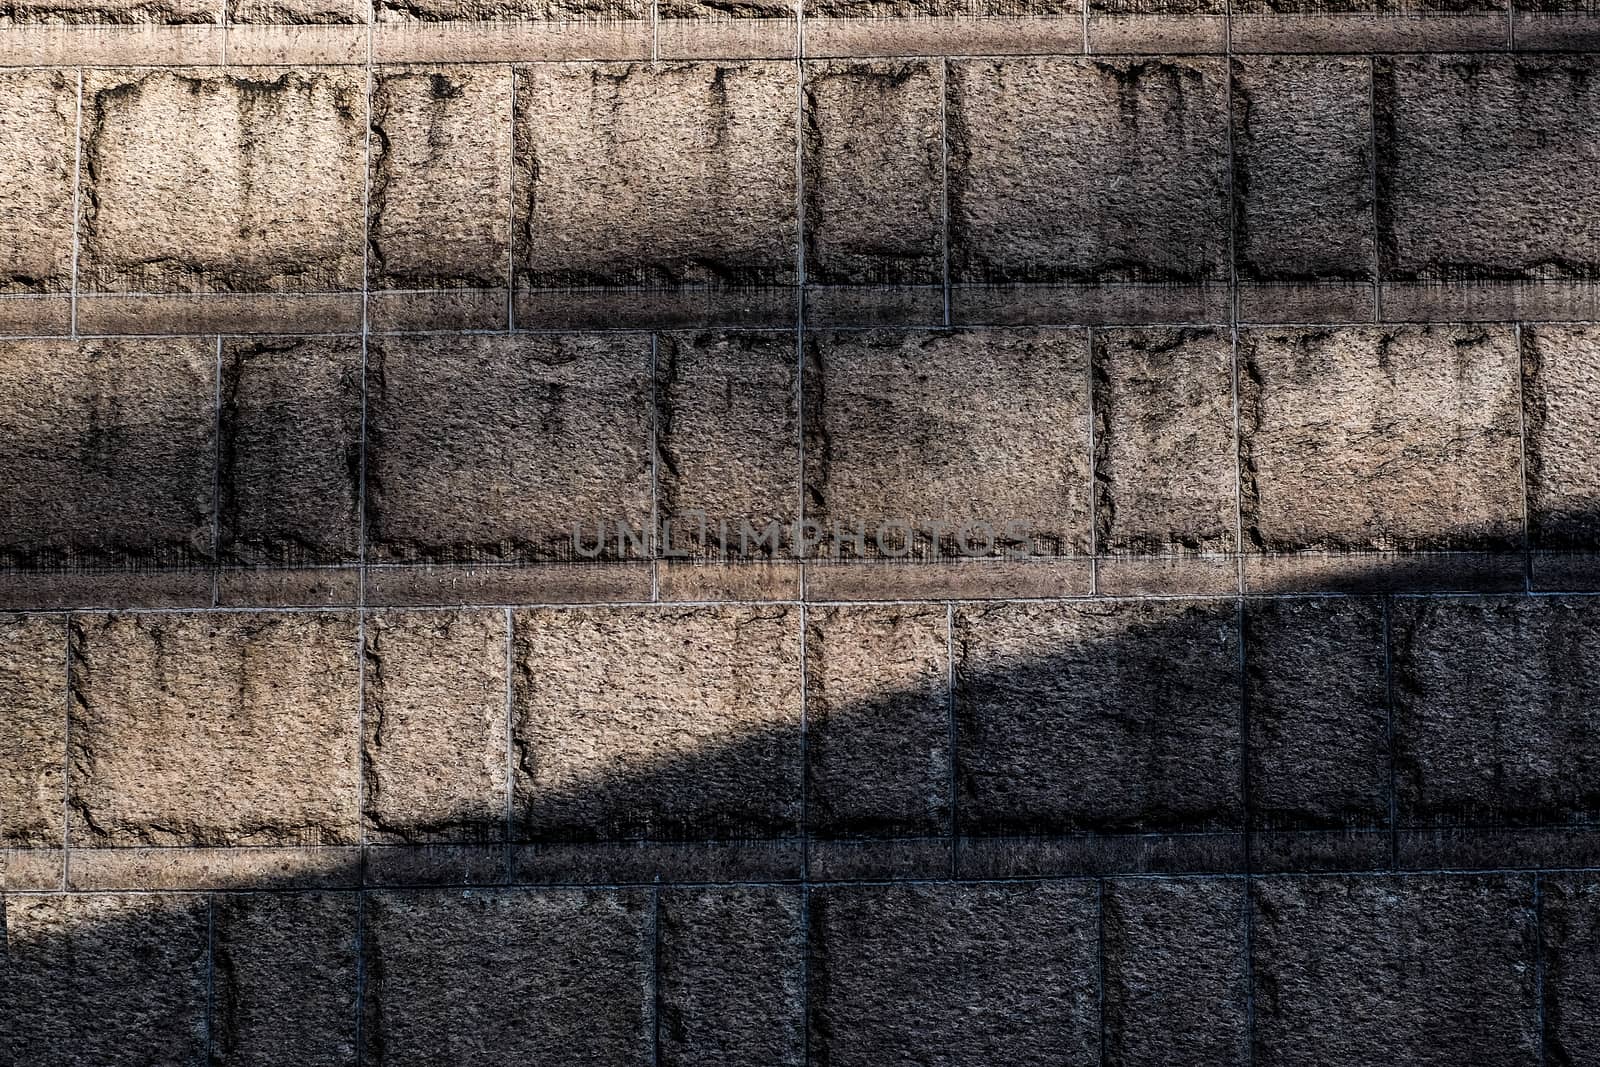 Brick walkway backgroud and close up